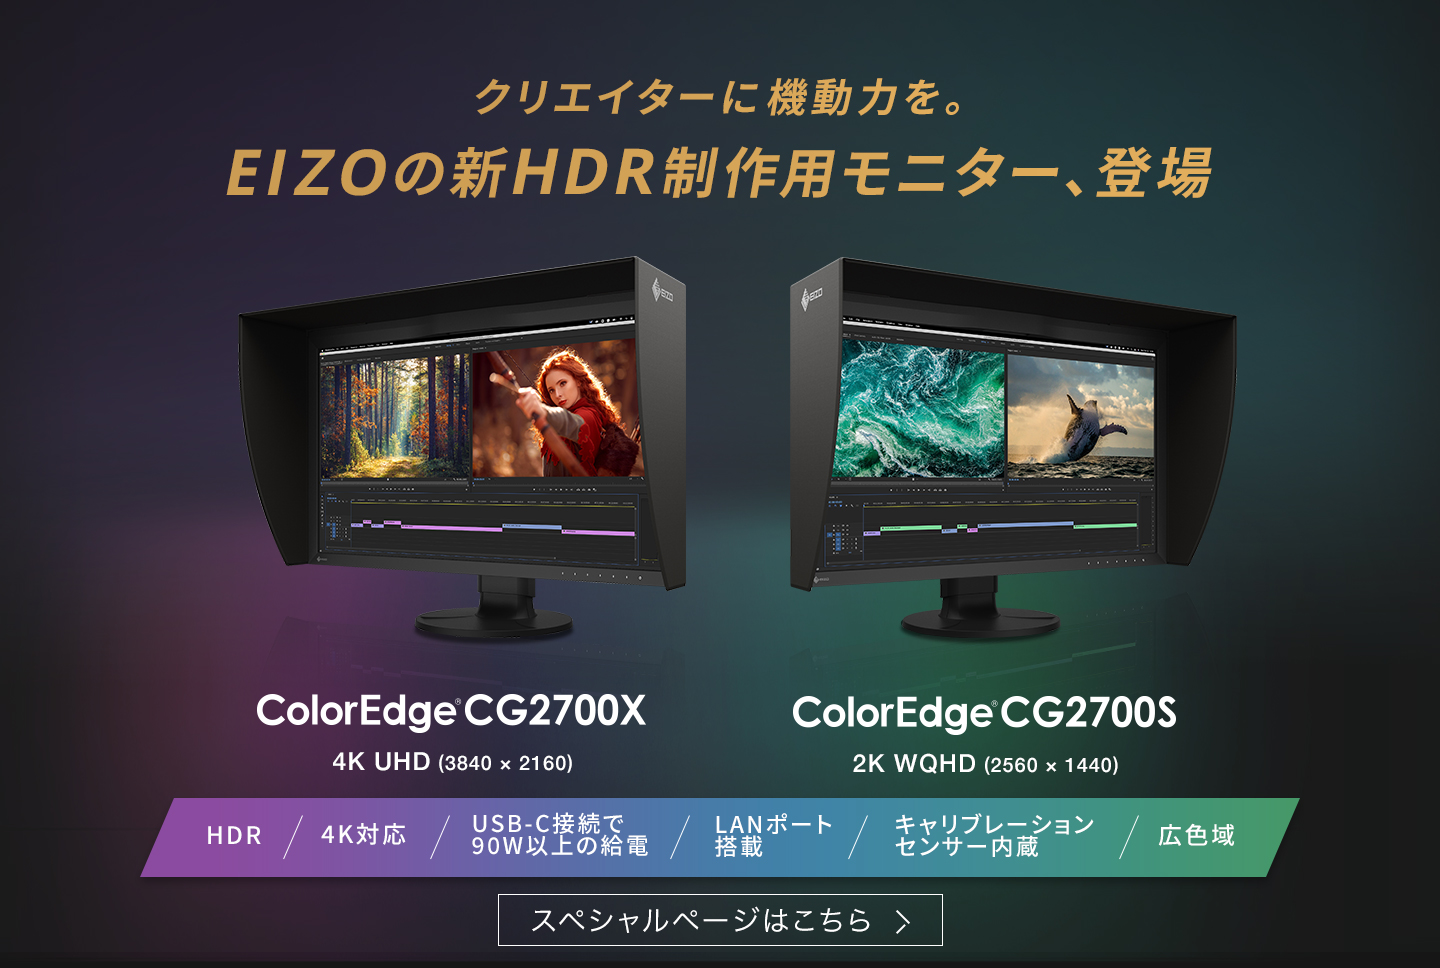 ColorEdge CG2700X | EIZO株式会社